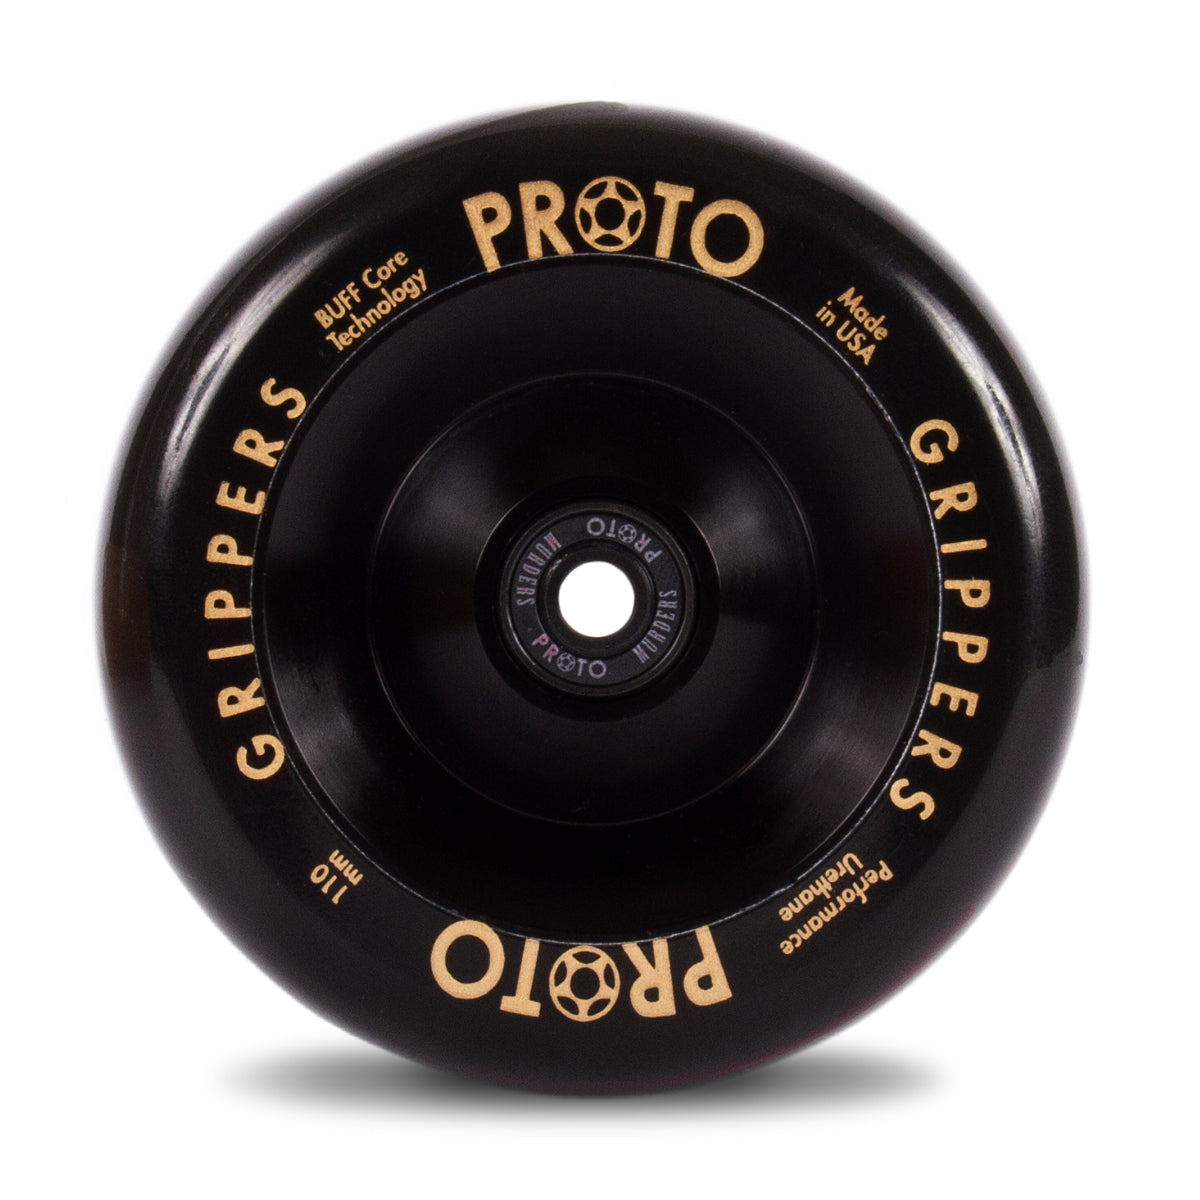 Proto, Proto Wheels Classic Full Core Grippers 110mm - Black (Pair)